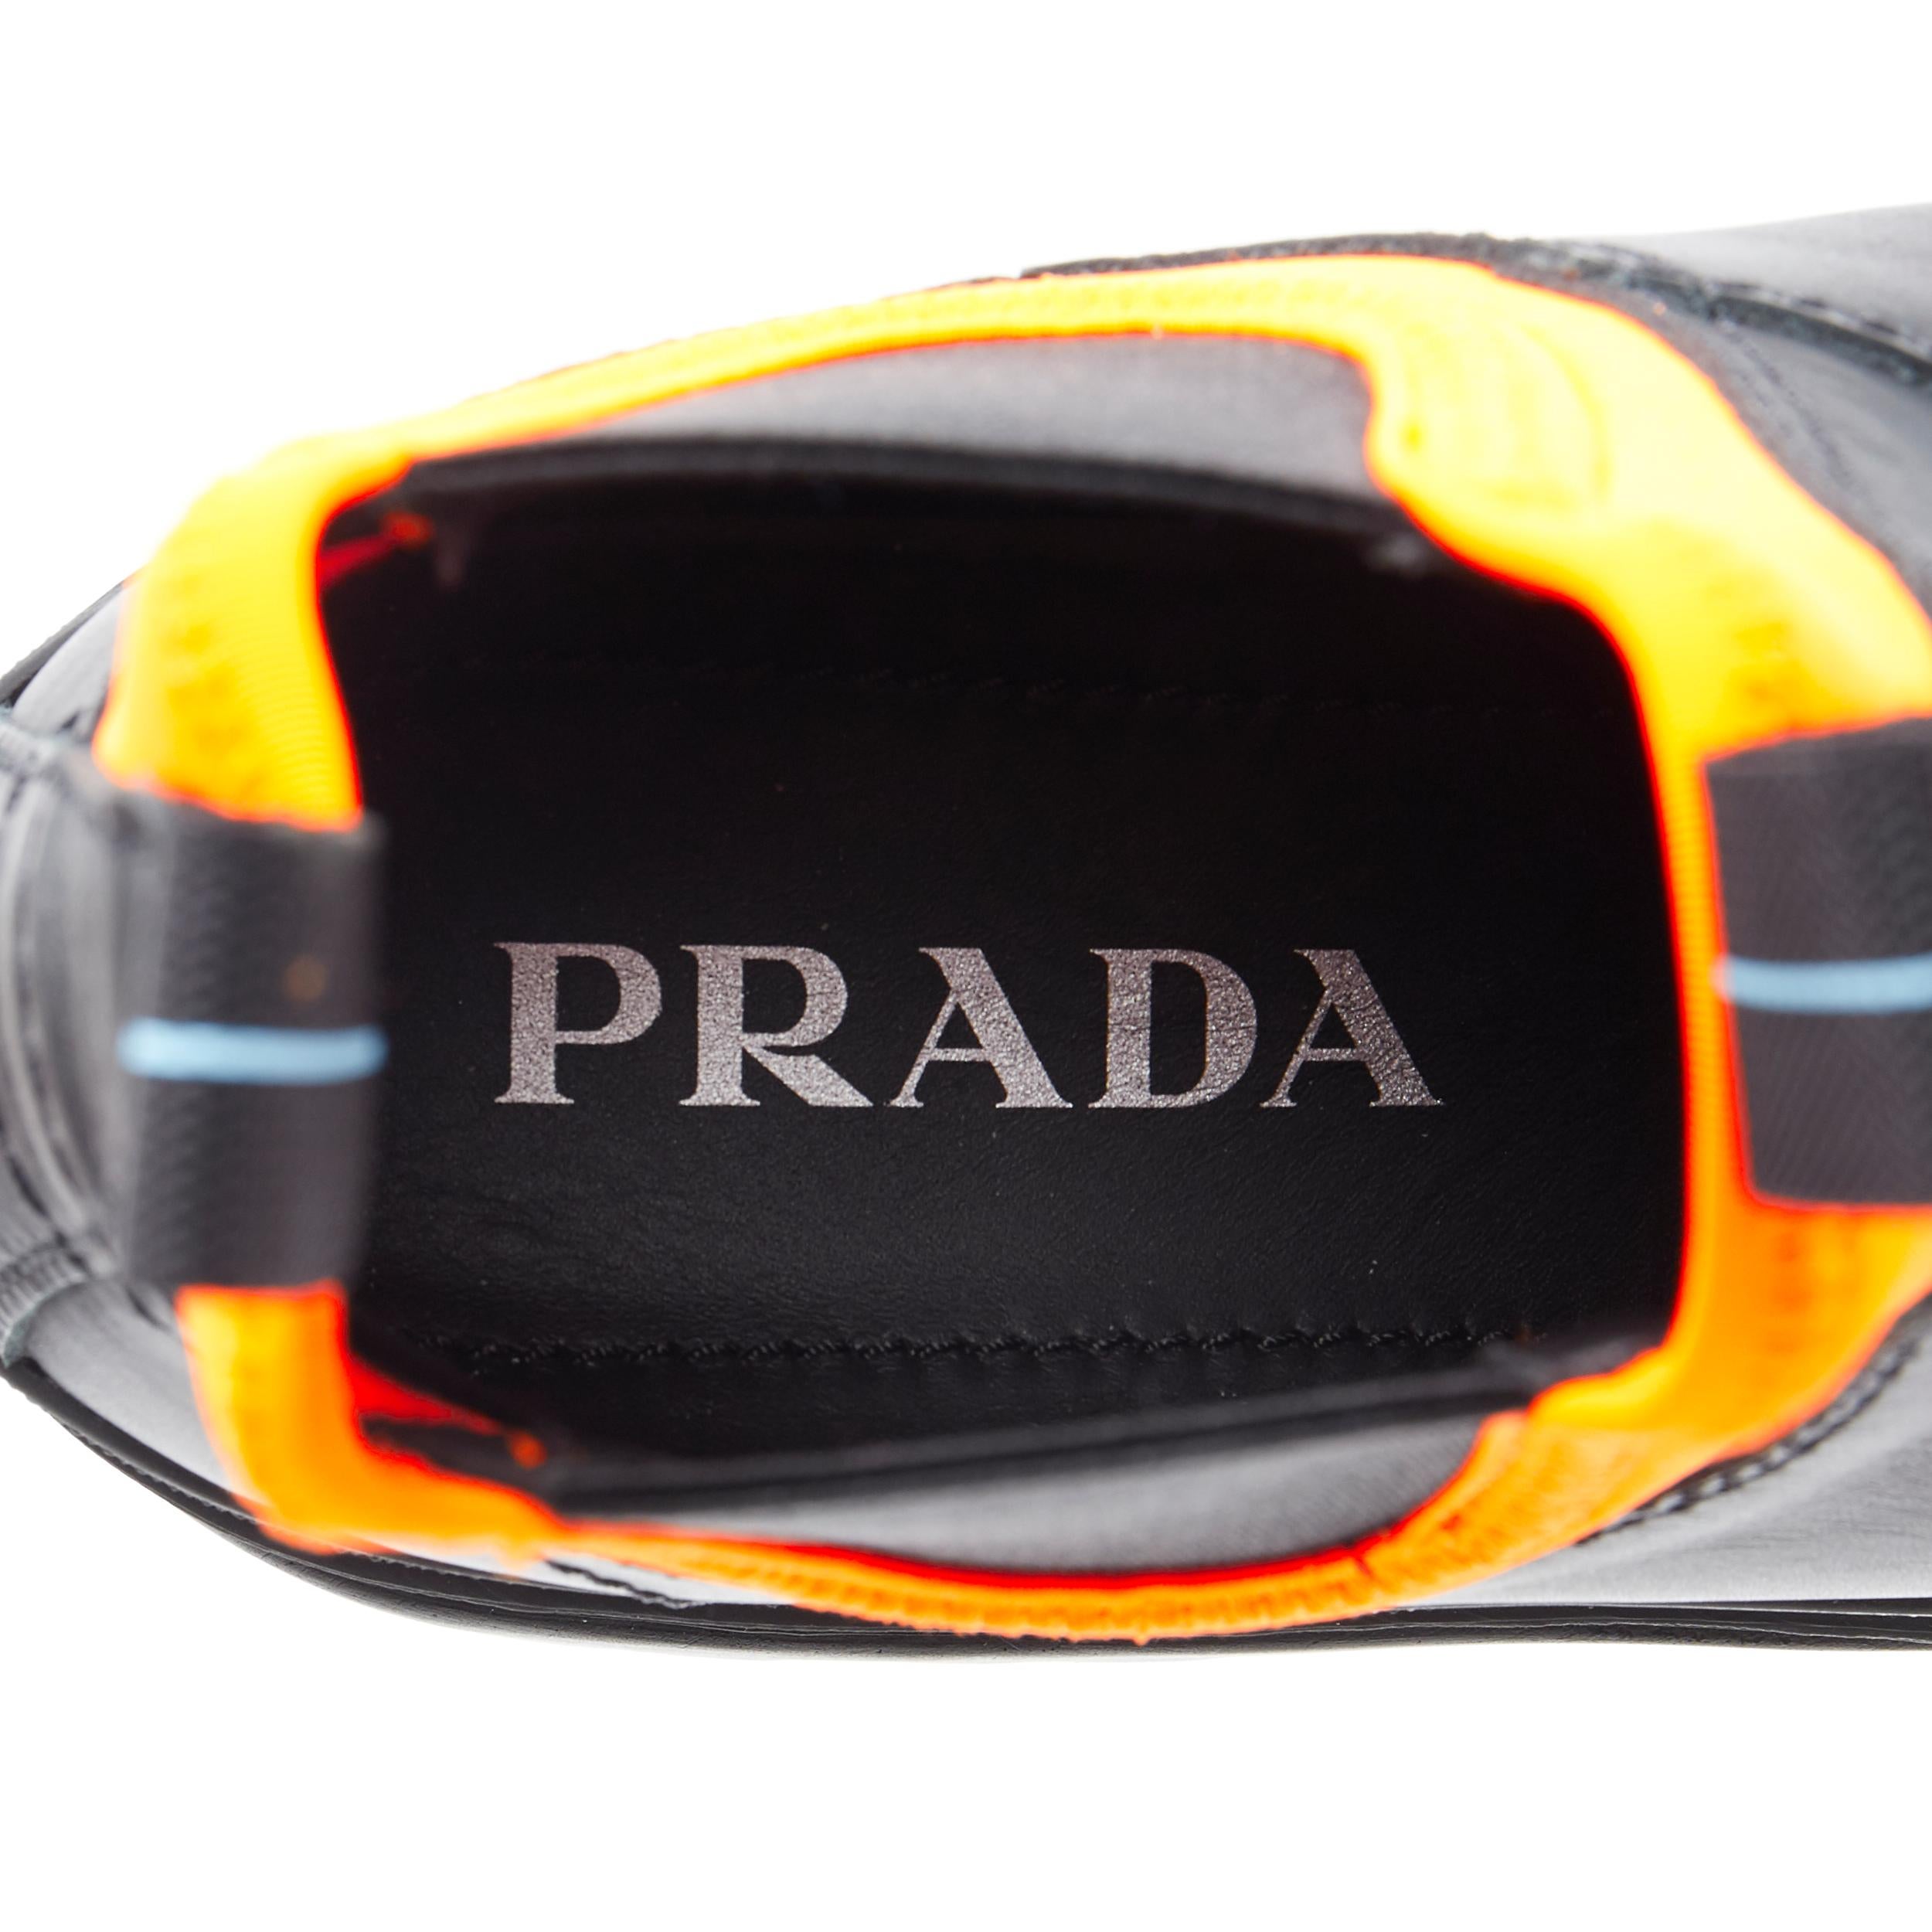 new PRADA 2018 Runway neon orange neoprene black leather ankle combat boot EU40 2